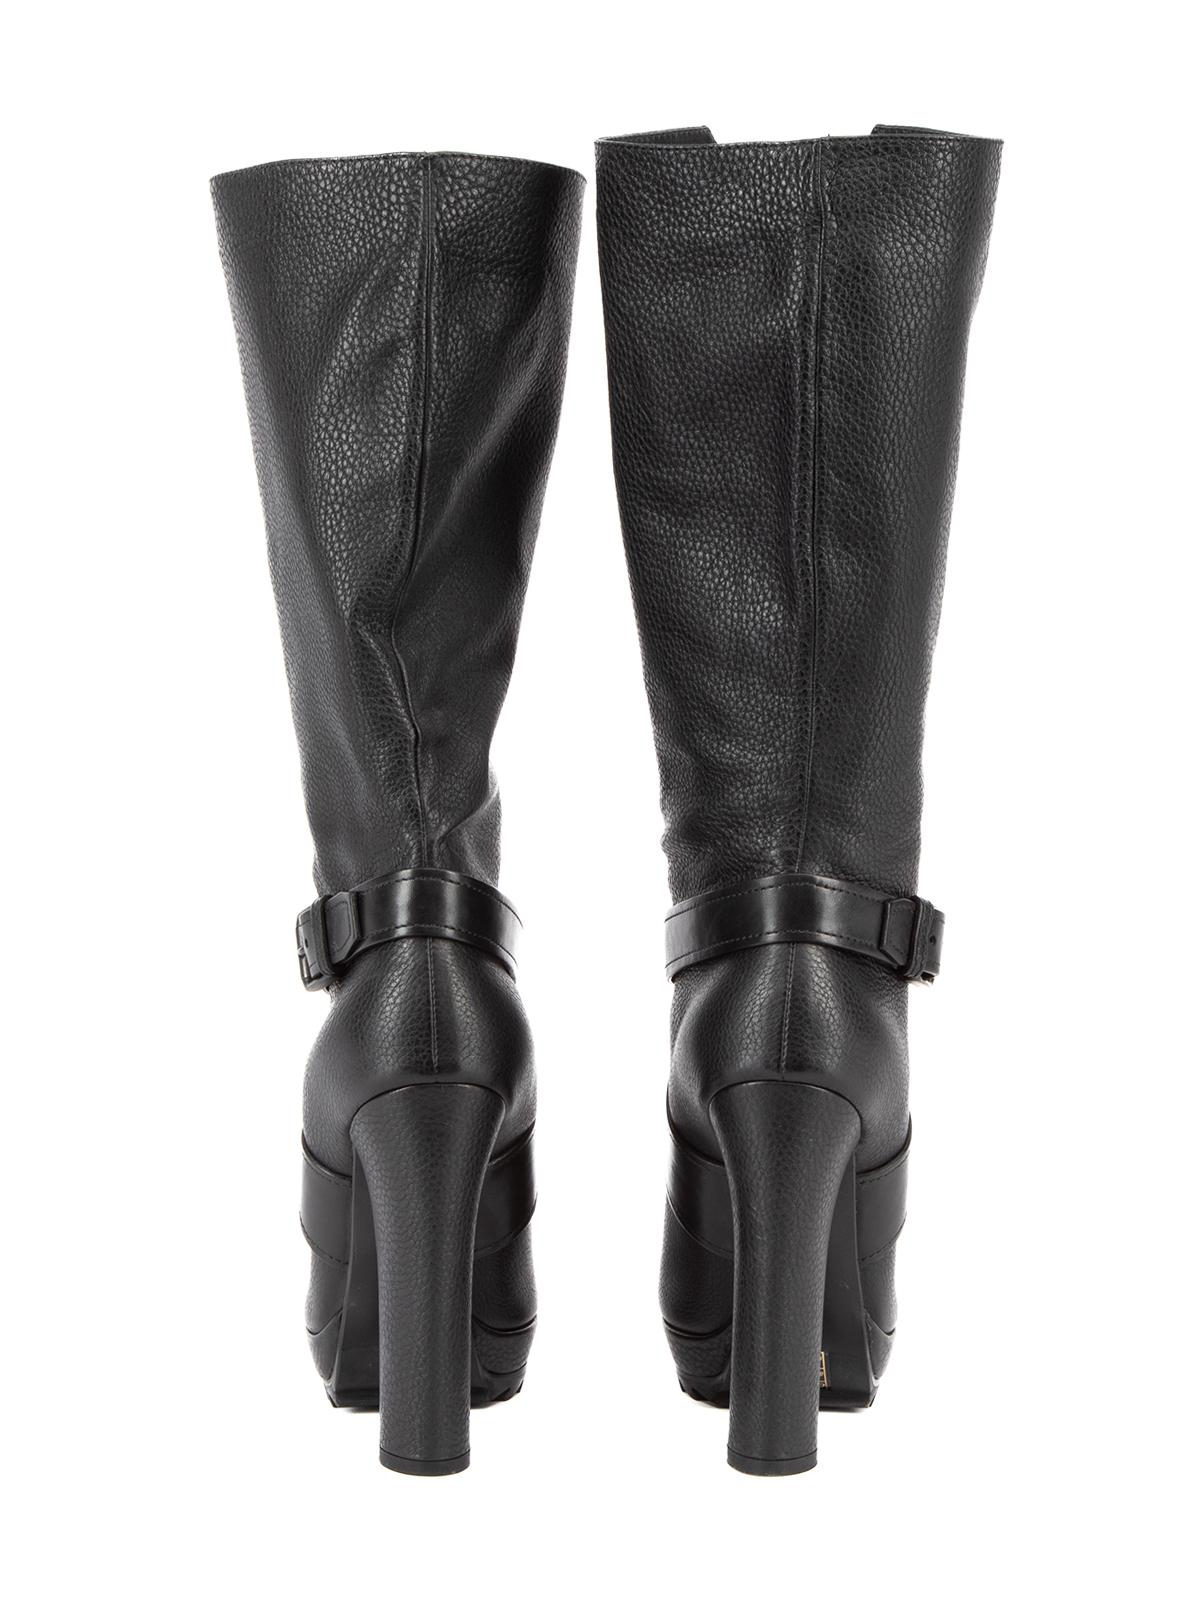 Pre-Loved Bottega Veneta Women's Knee High Boots with Buckle Detail For Sale 1